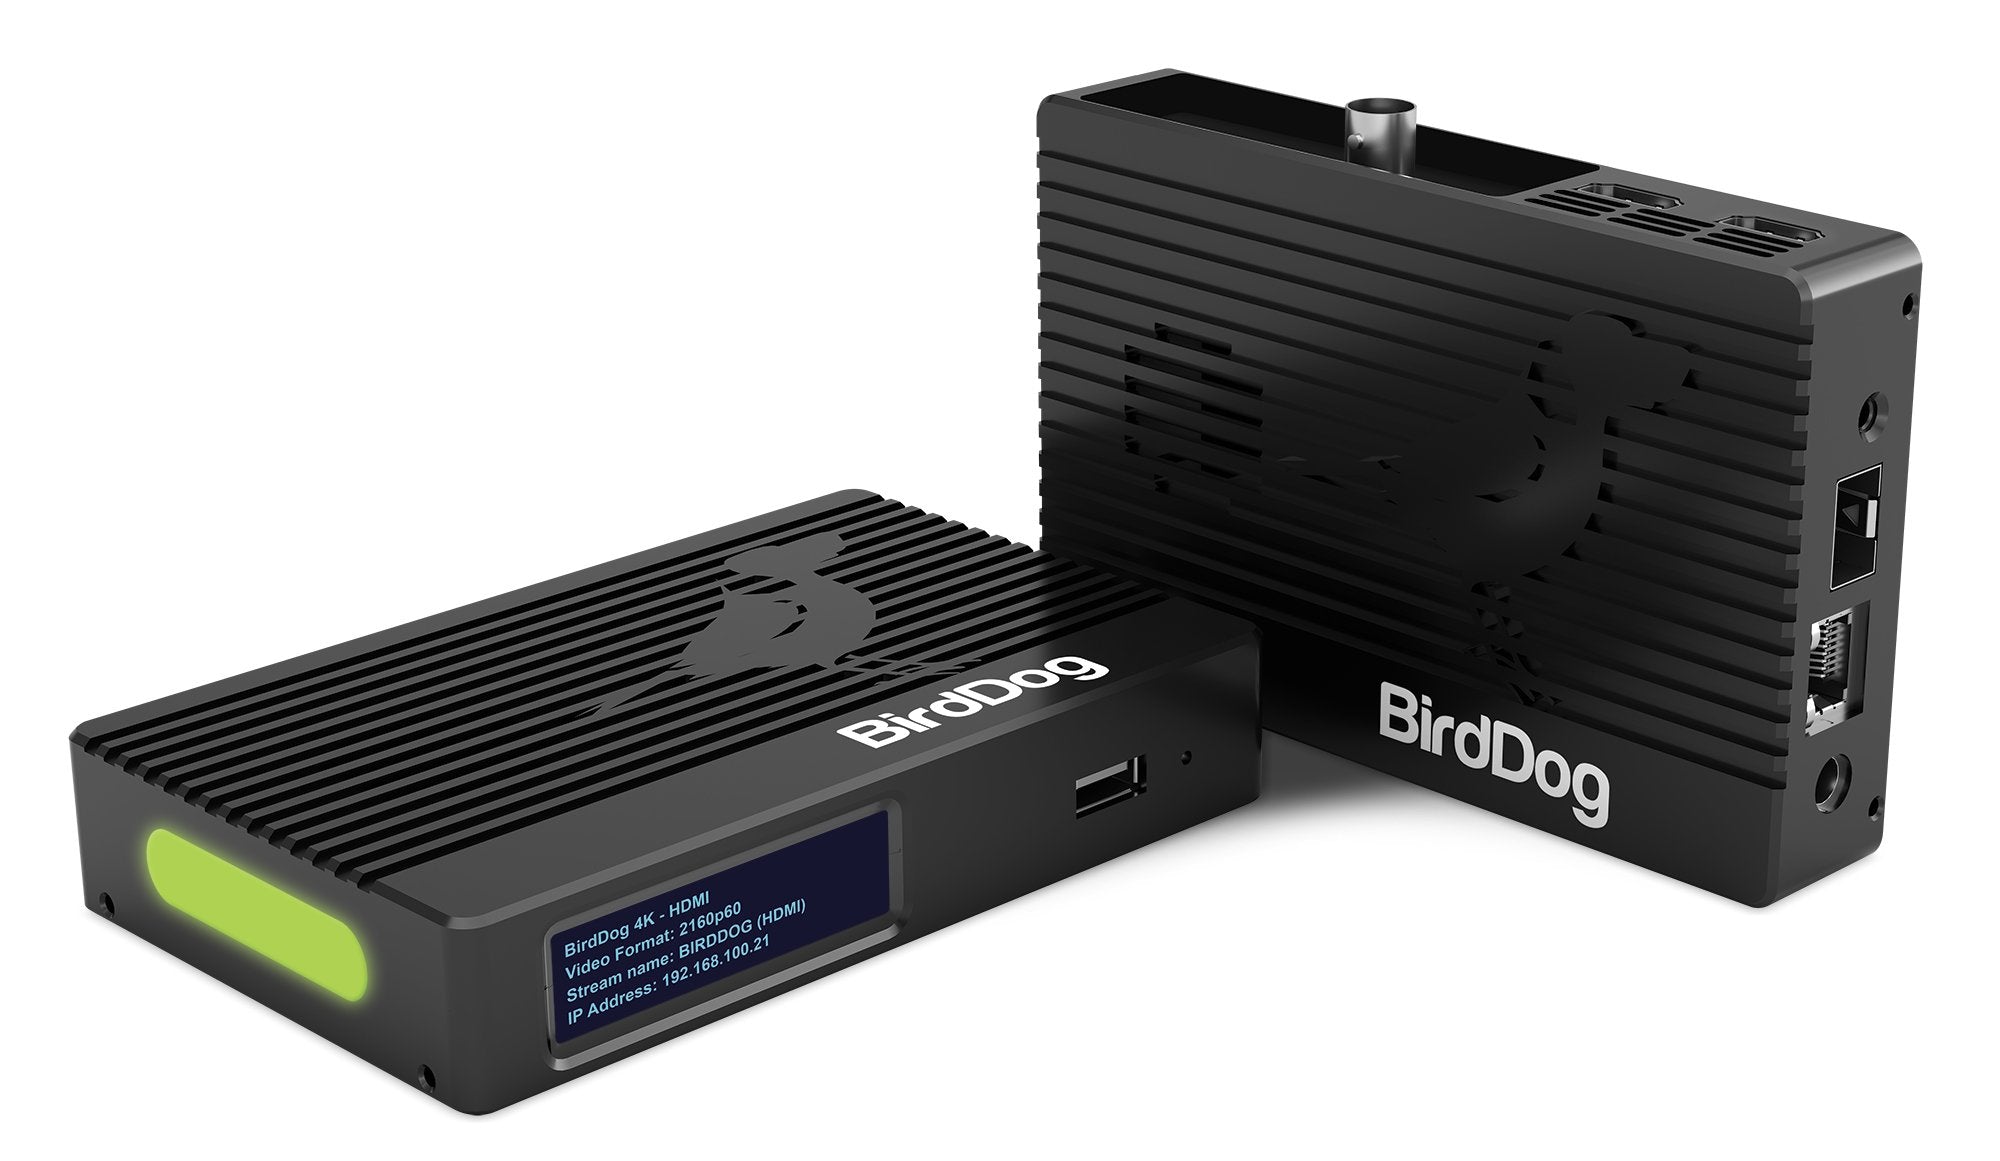 Birddog 4K HDMI NDI Encoder/Decoder